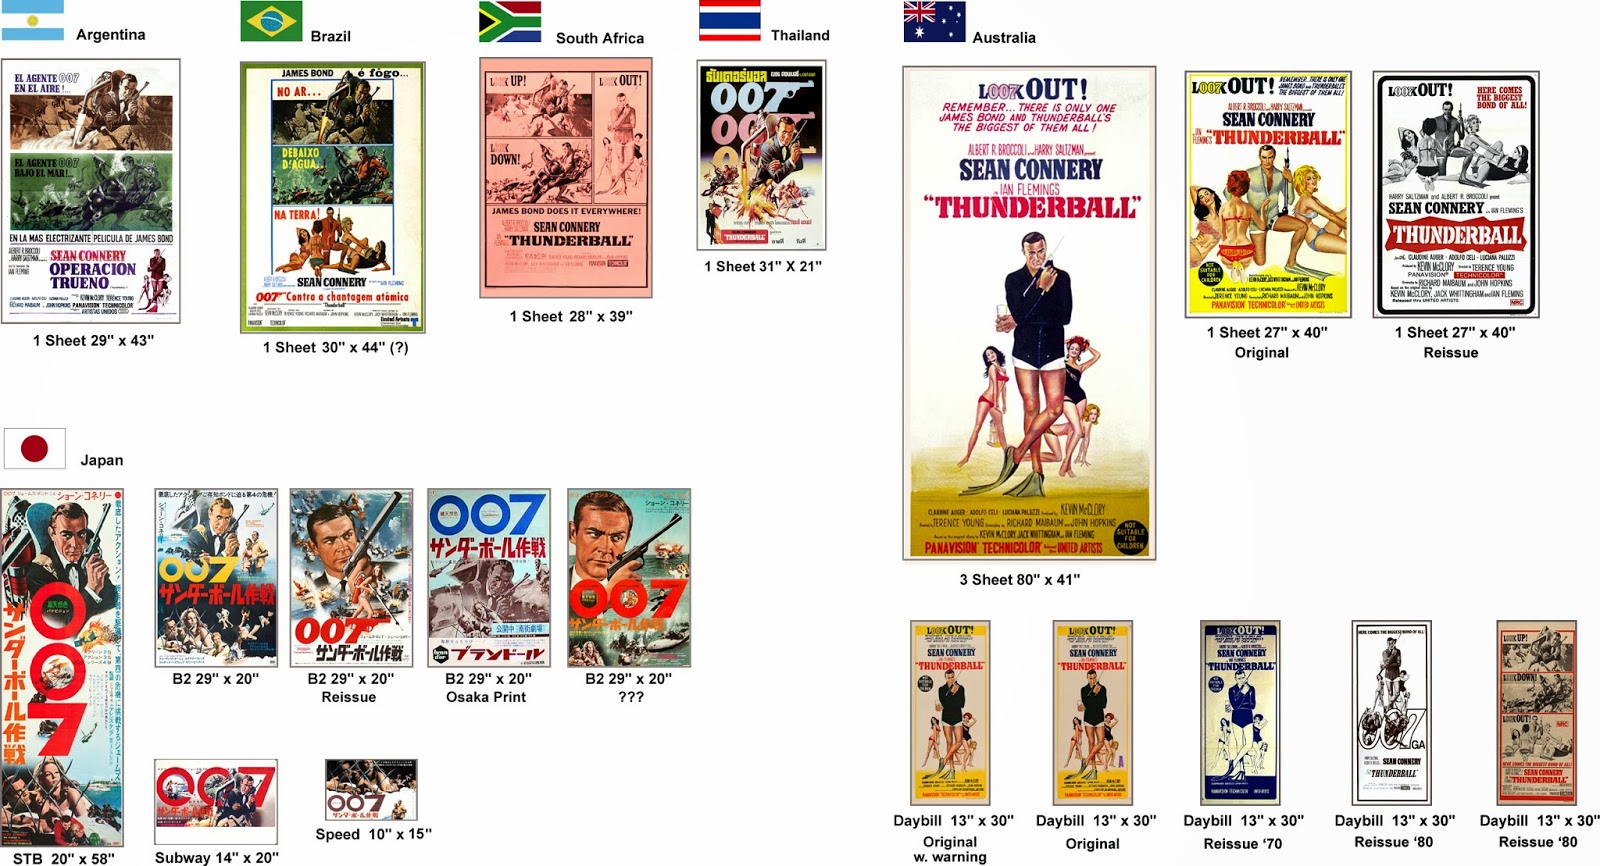 Webs interesantes sobre Bond Thunderball+international+posters+james+bond+007+argentina+thailand+australia+daybill+3+sheet